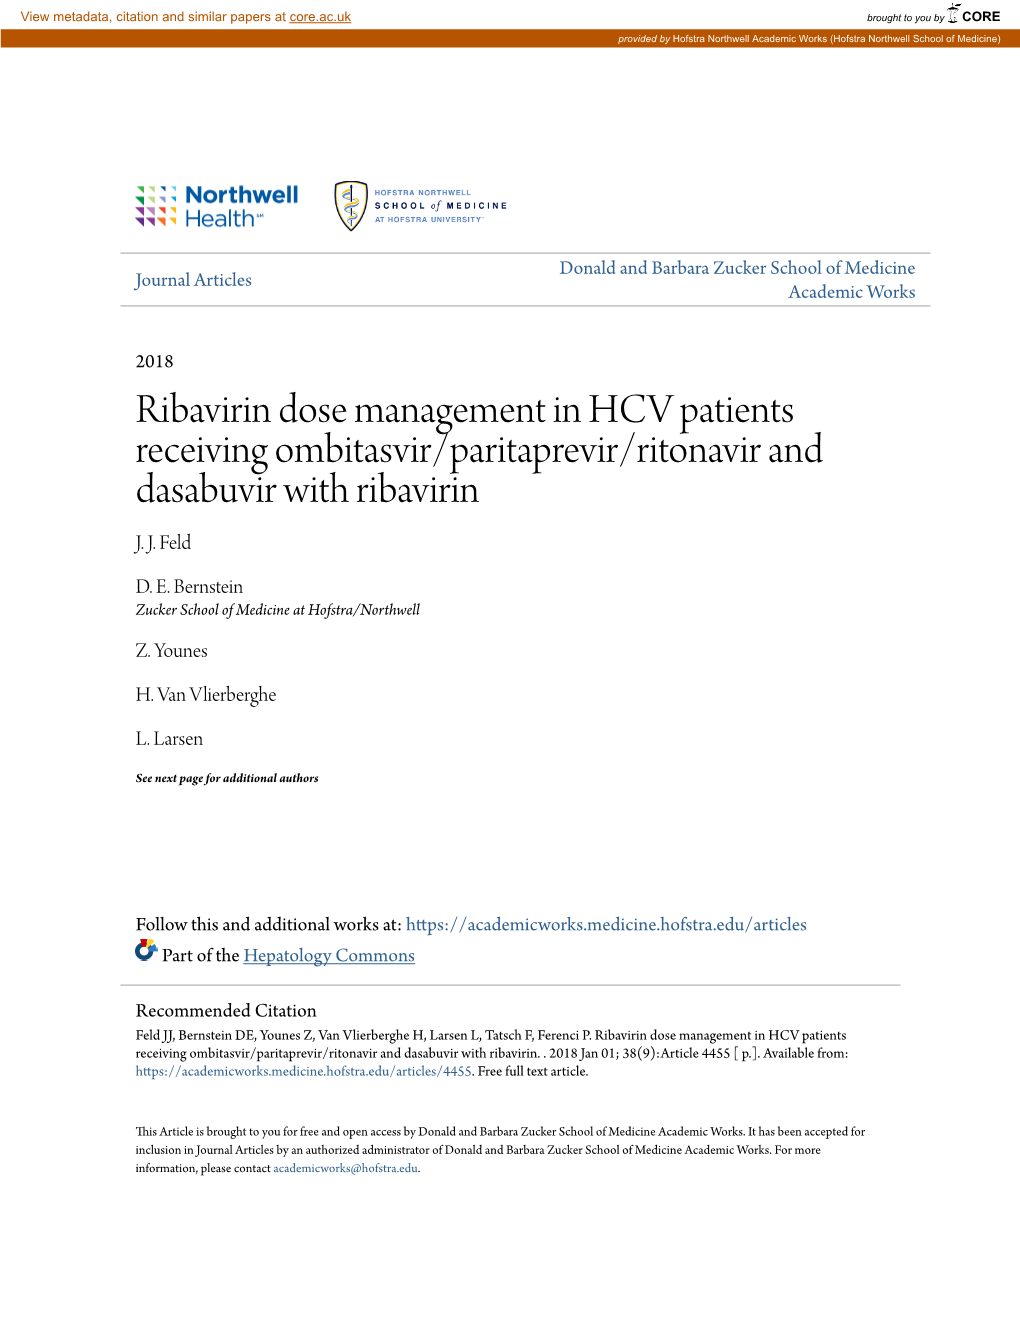 Ribavirin Dose Management in HCV Patients Receiving Ombitasvir/Paritaprevir/Ritonavir and Dasabuvir with Ribavirin J